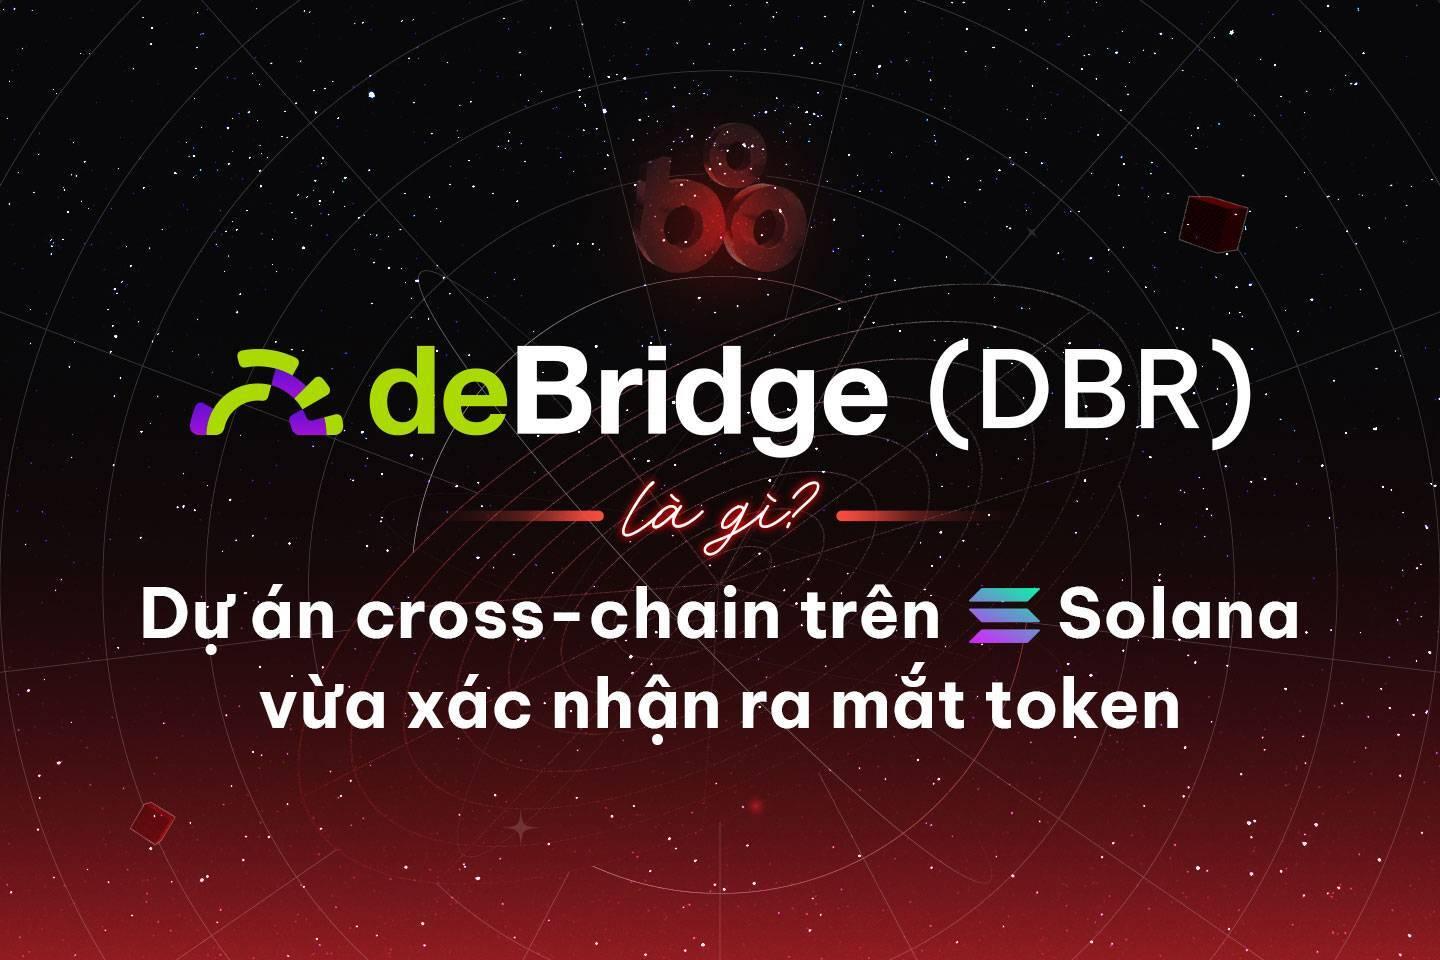 debridge-dbr-la-gi-du-an-cross-chain-tren-solana-vua-xac-nhan-ra-mat-token